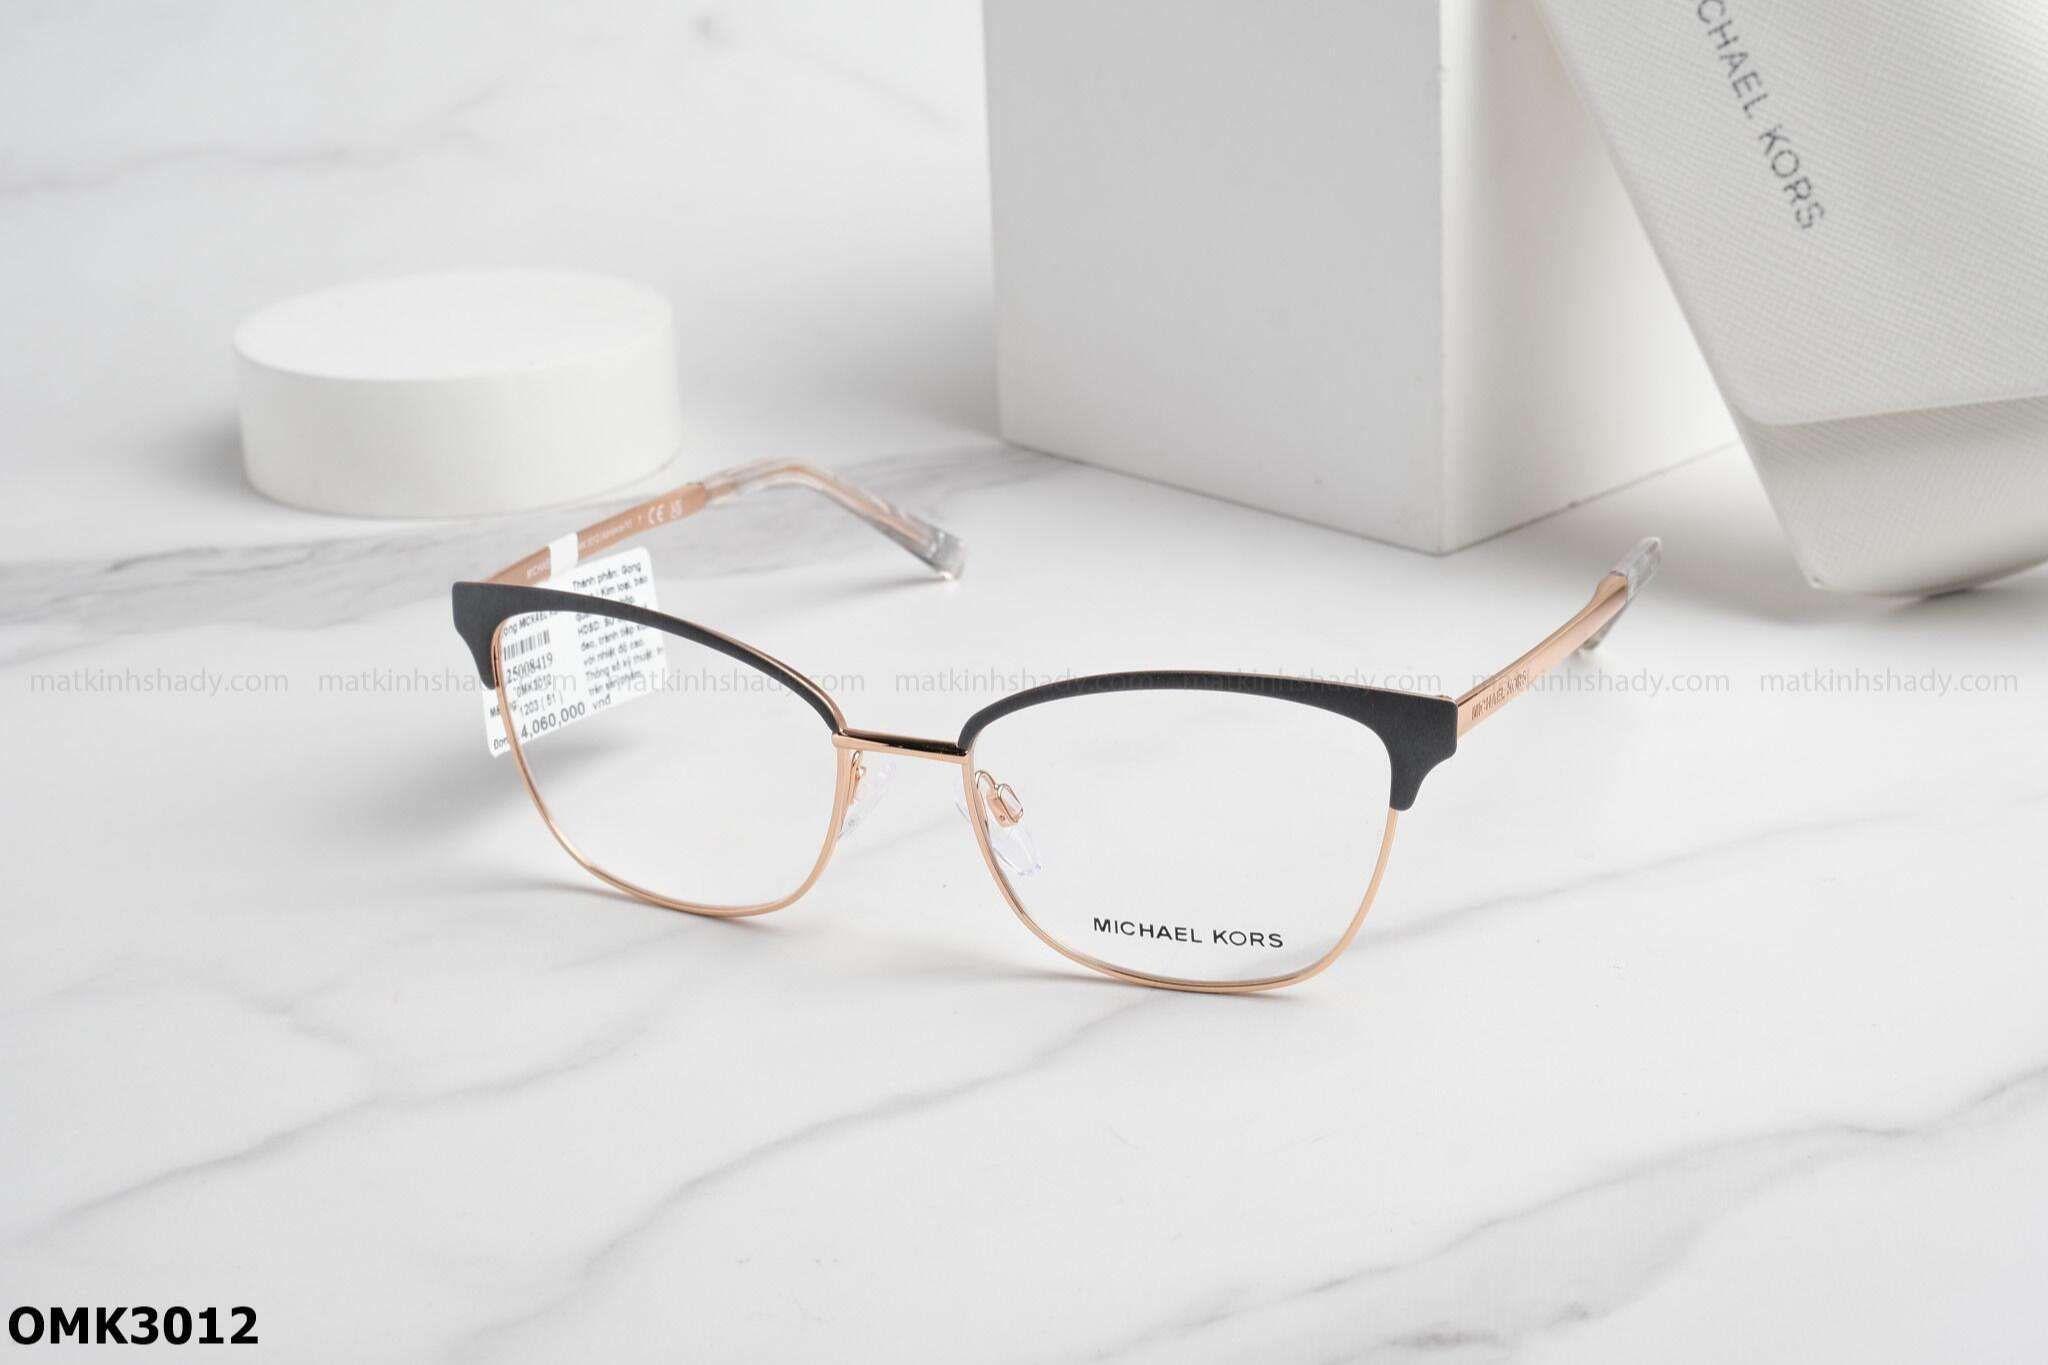  Michael Kors Eyewear - Glasses - 0MK3012 